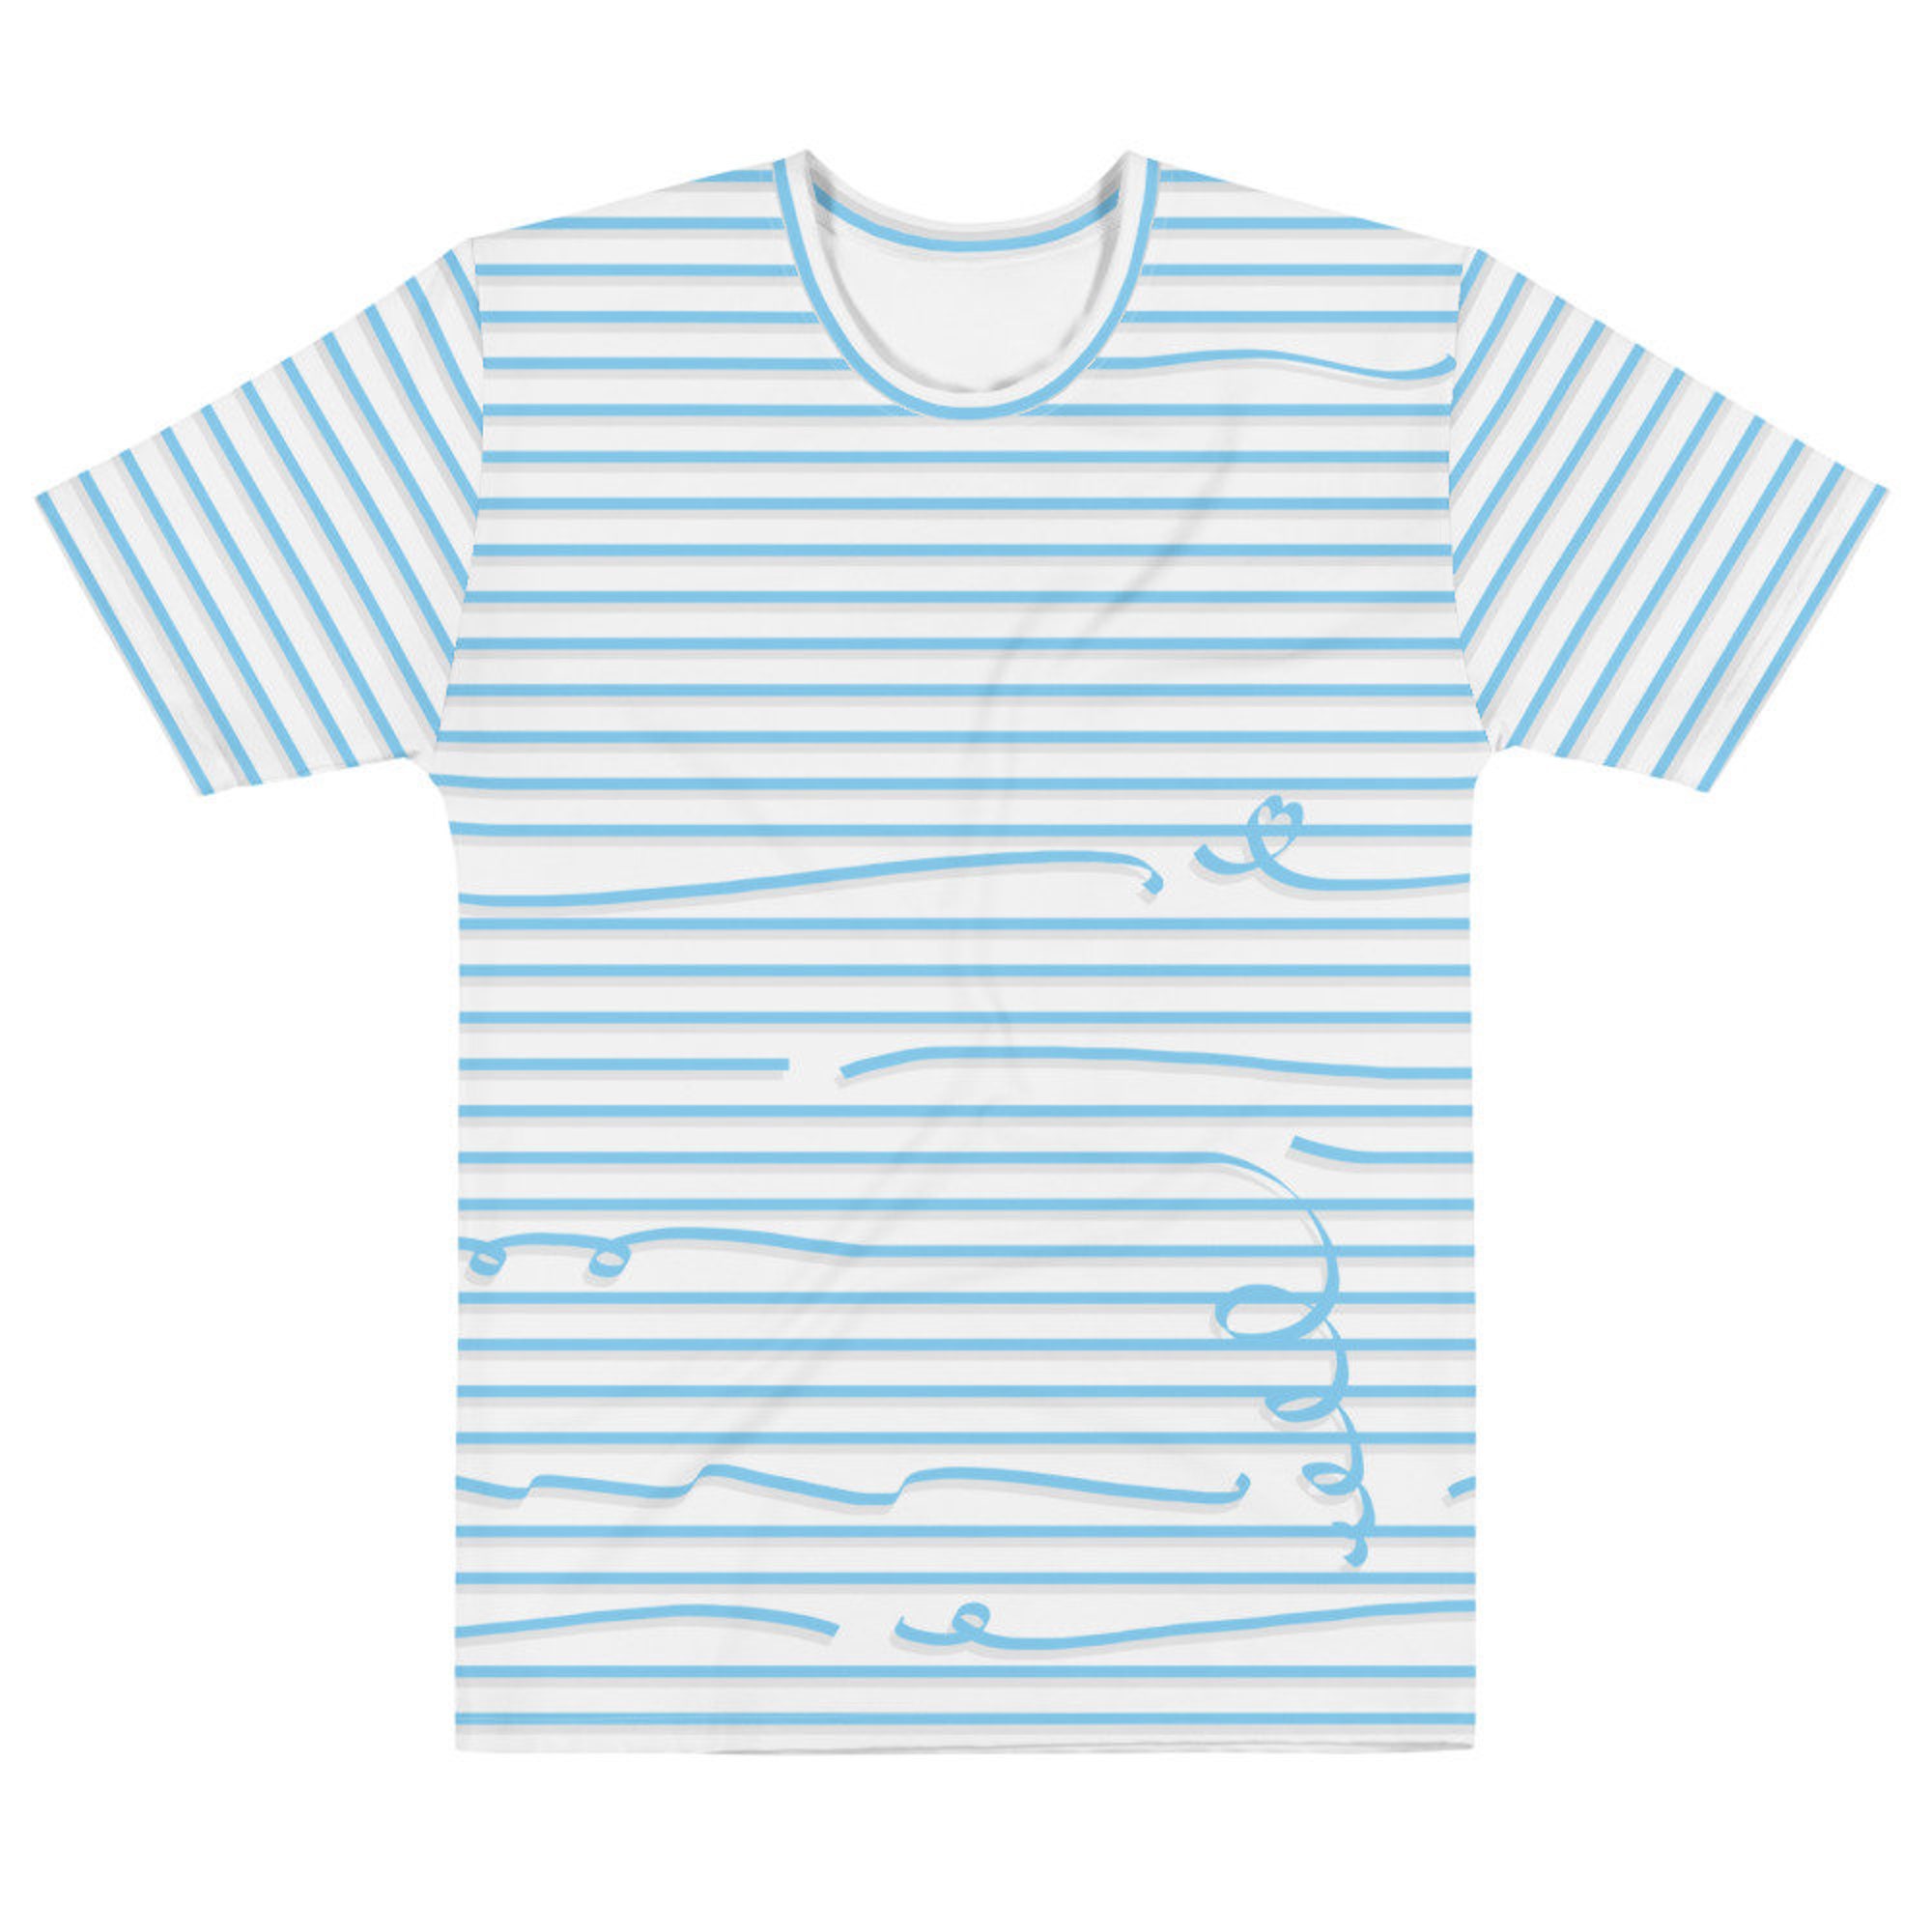 Discover T-shirt, Pastel Blue Stripe pattern